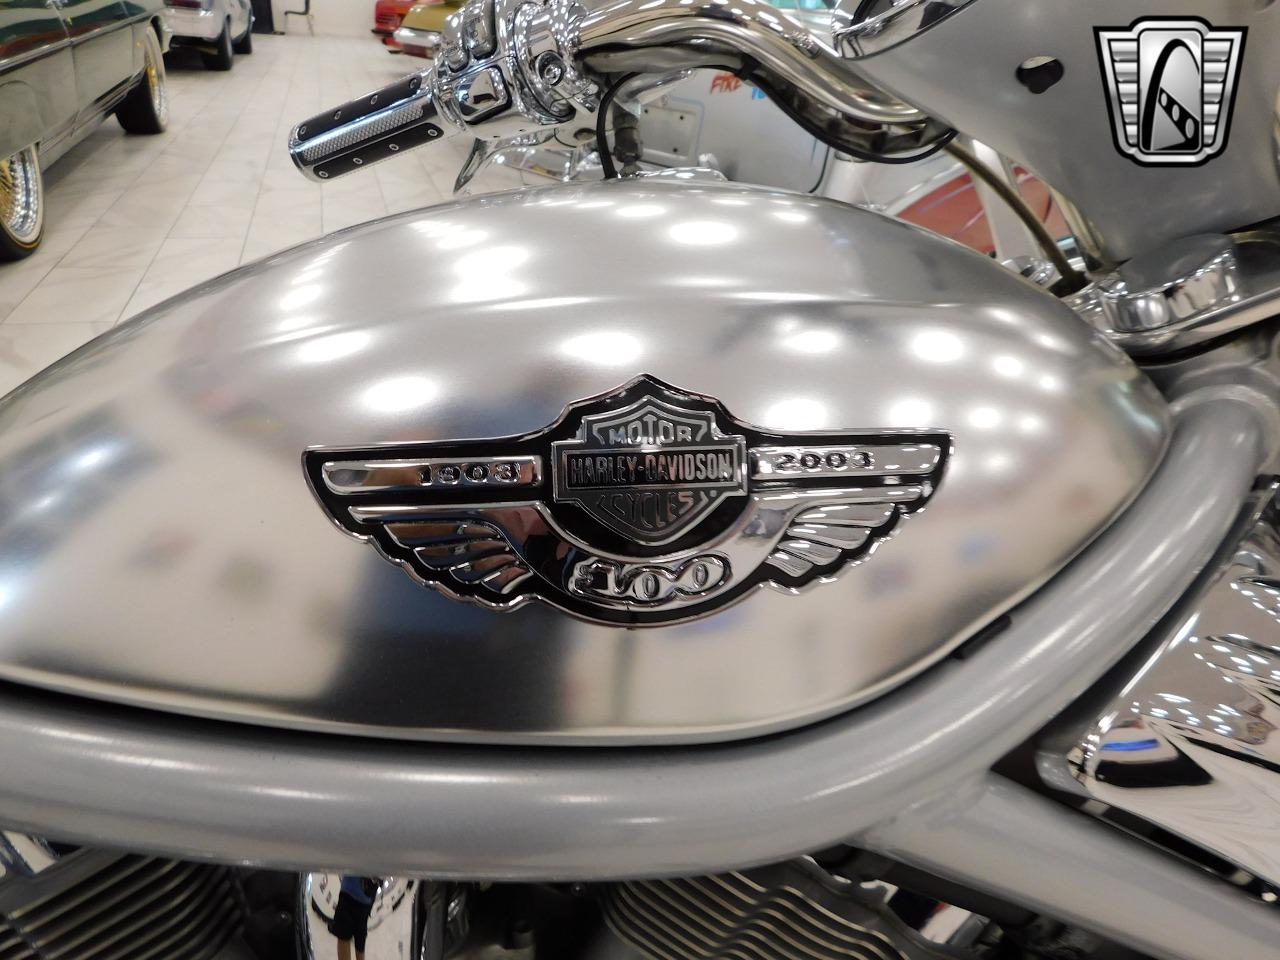 2003 Harley Davidson V-Rod